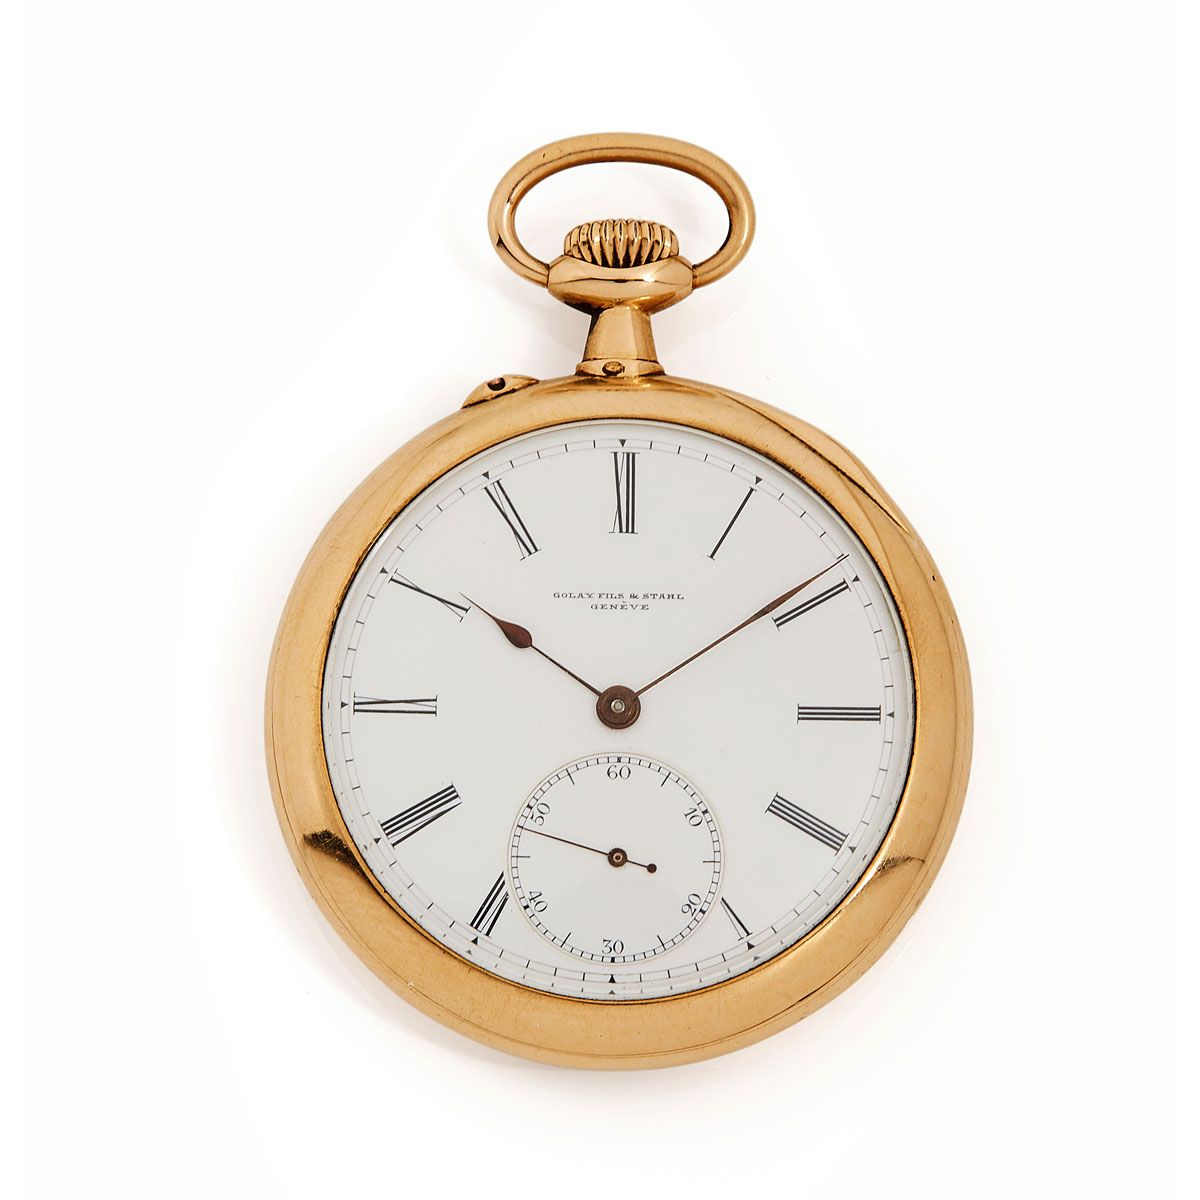 Null Golay Fils & Stahl, No. 30612/100008, circa 1930


Un bellissimo orologio d&hellip;